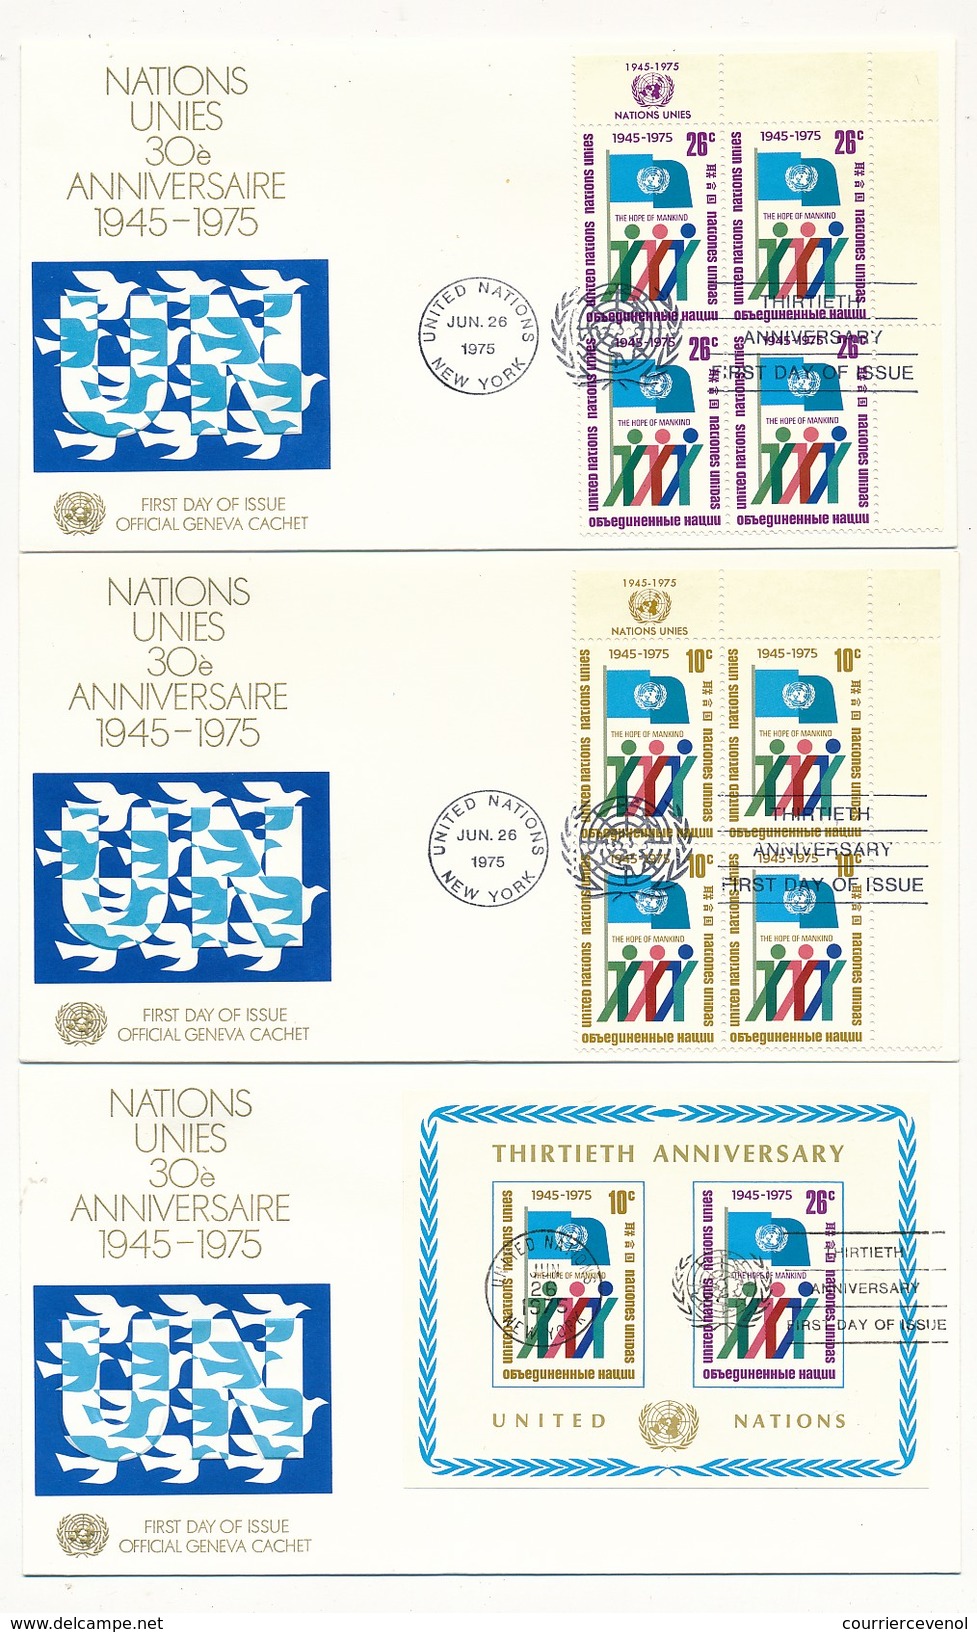 NATIONS UNIES - 16 Enveloppes FDC - 30eme Anniversaire 1975 New York / San Francisco / Genève - VN